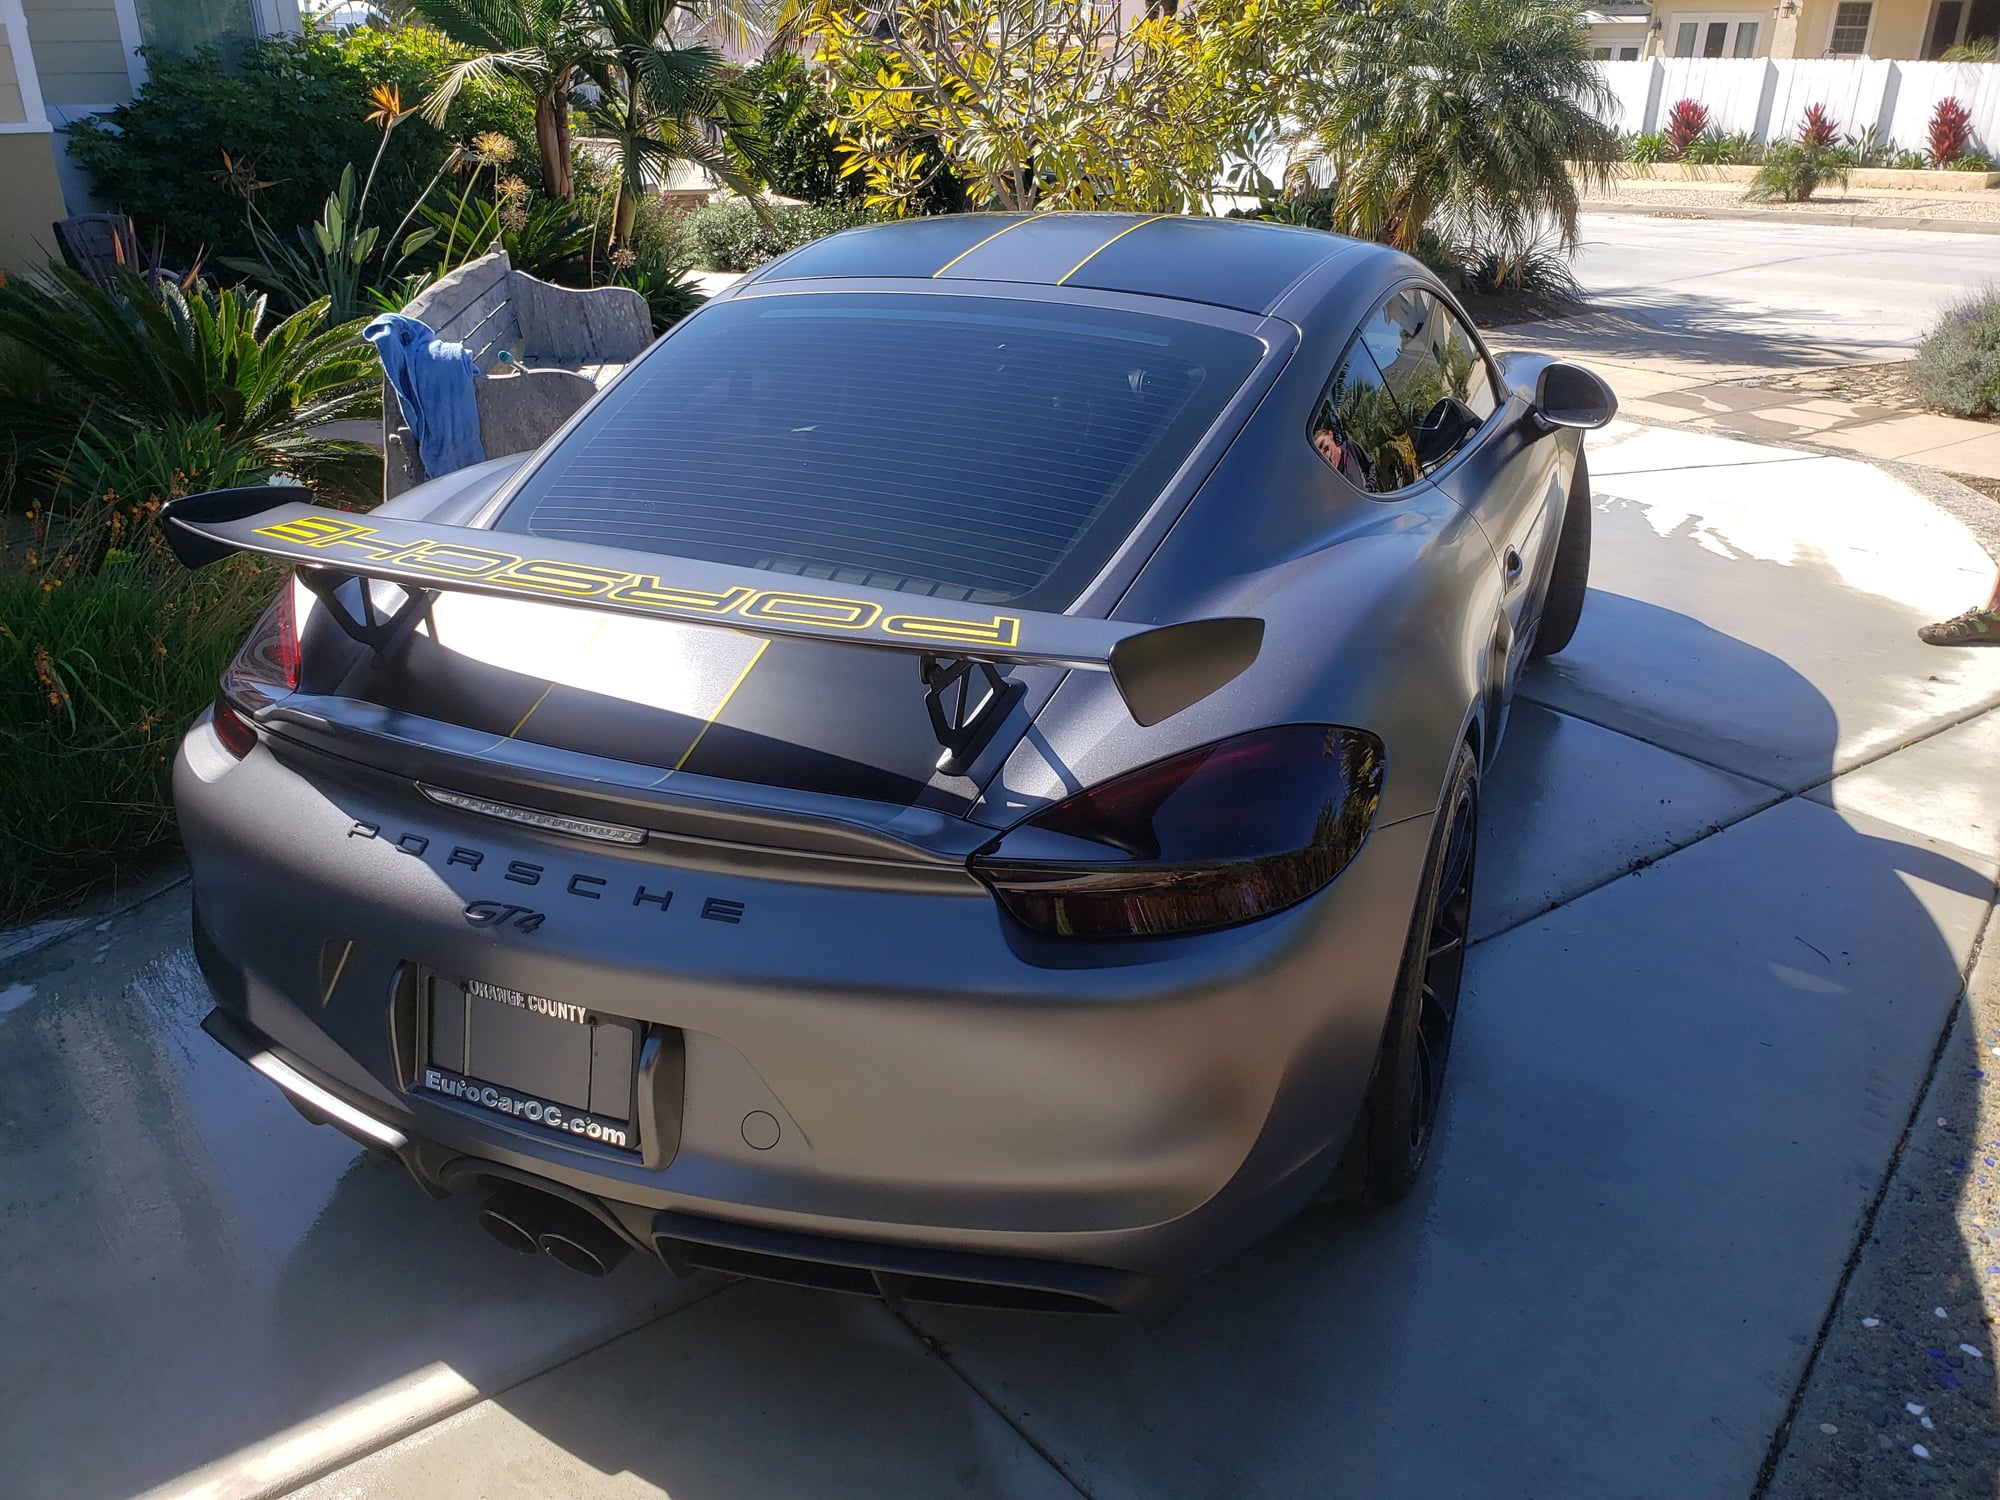 2016 Porsche Cayman GT4 - 2016 Porsche Cayman GT4 (981 Model) - Used - VIN WP0AC2A8XGK192666 - 26,514 Miles - 6 cyl - 2WD - Manual - San Diego, CA 92109, United States